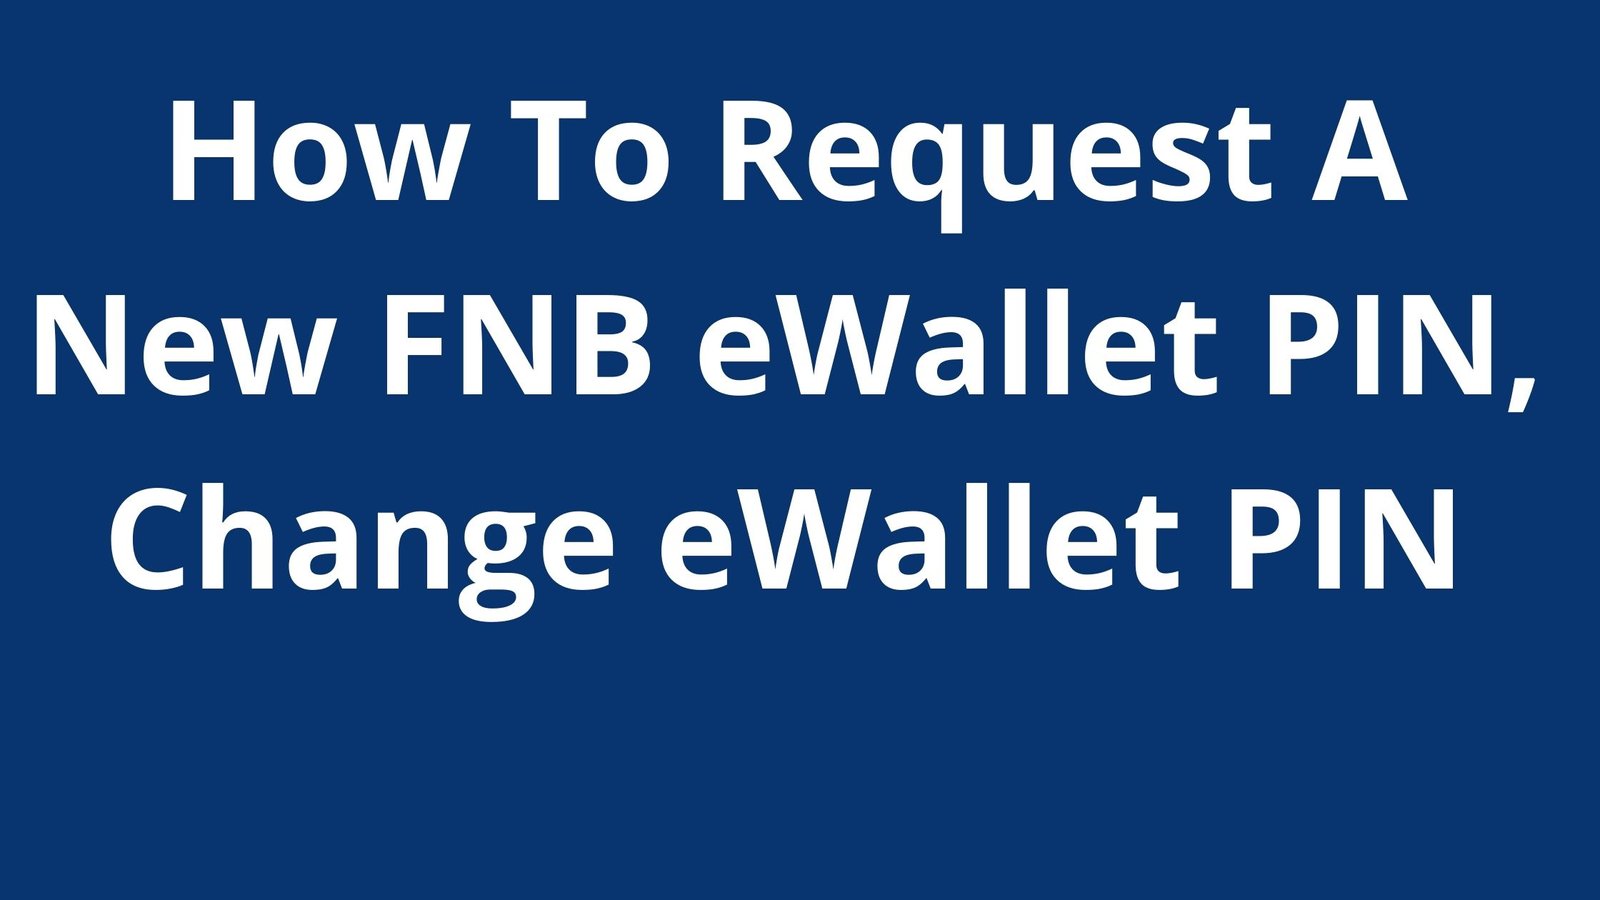 fnb ewallet withdrawal charges